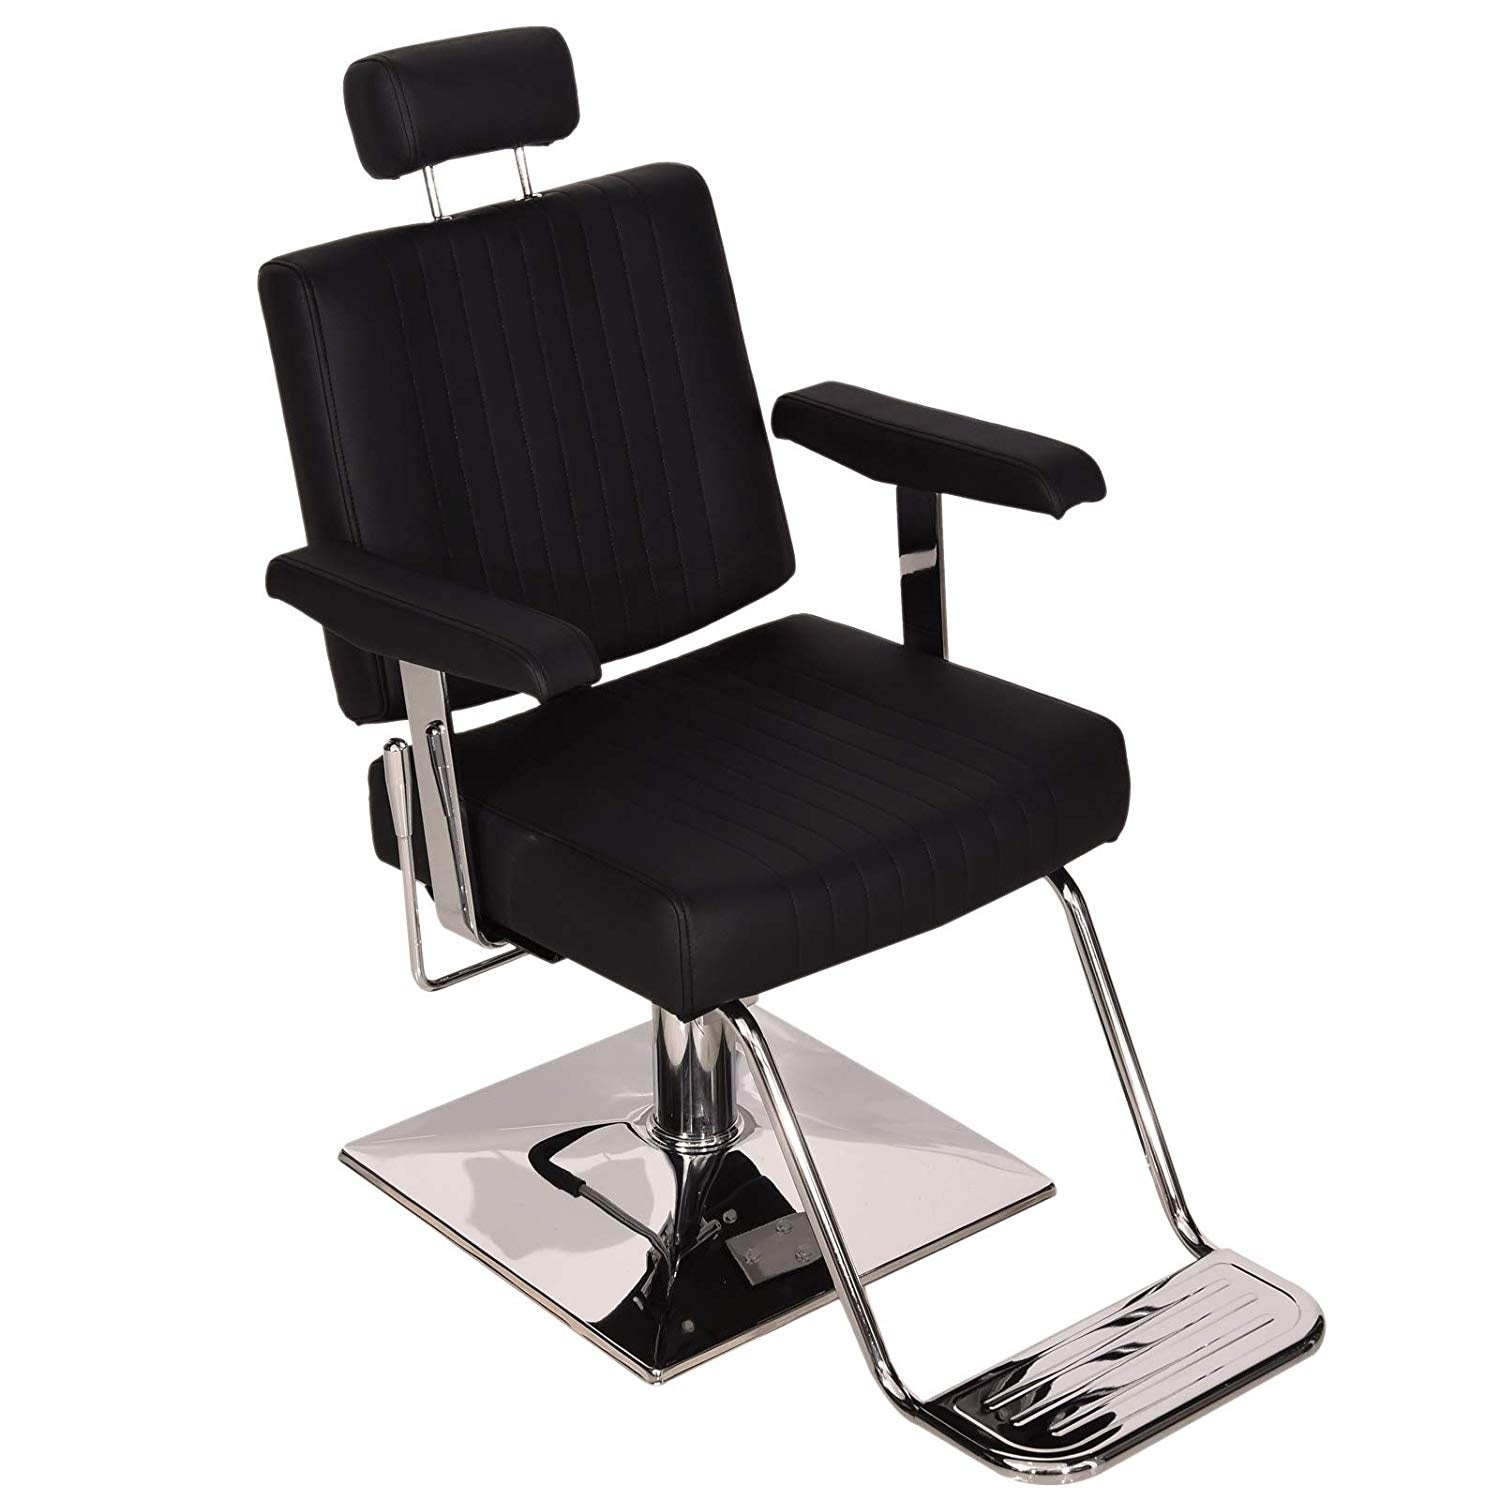 Shop Barberpub Hydraulic Reclining Barber Chair Salon Chair Beauty